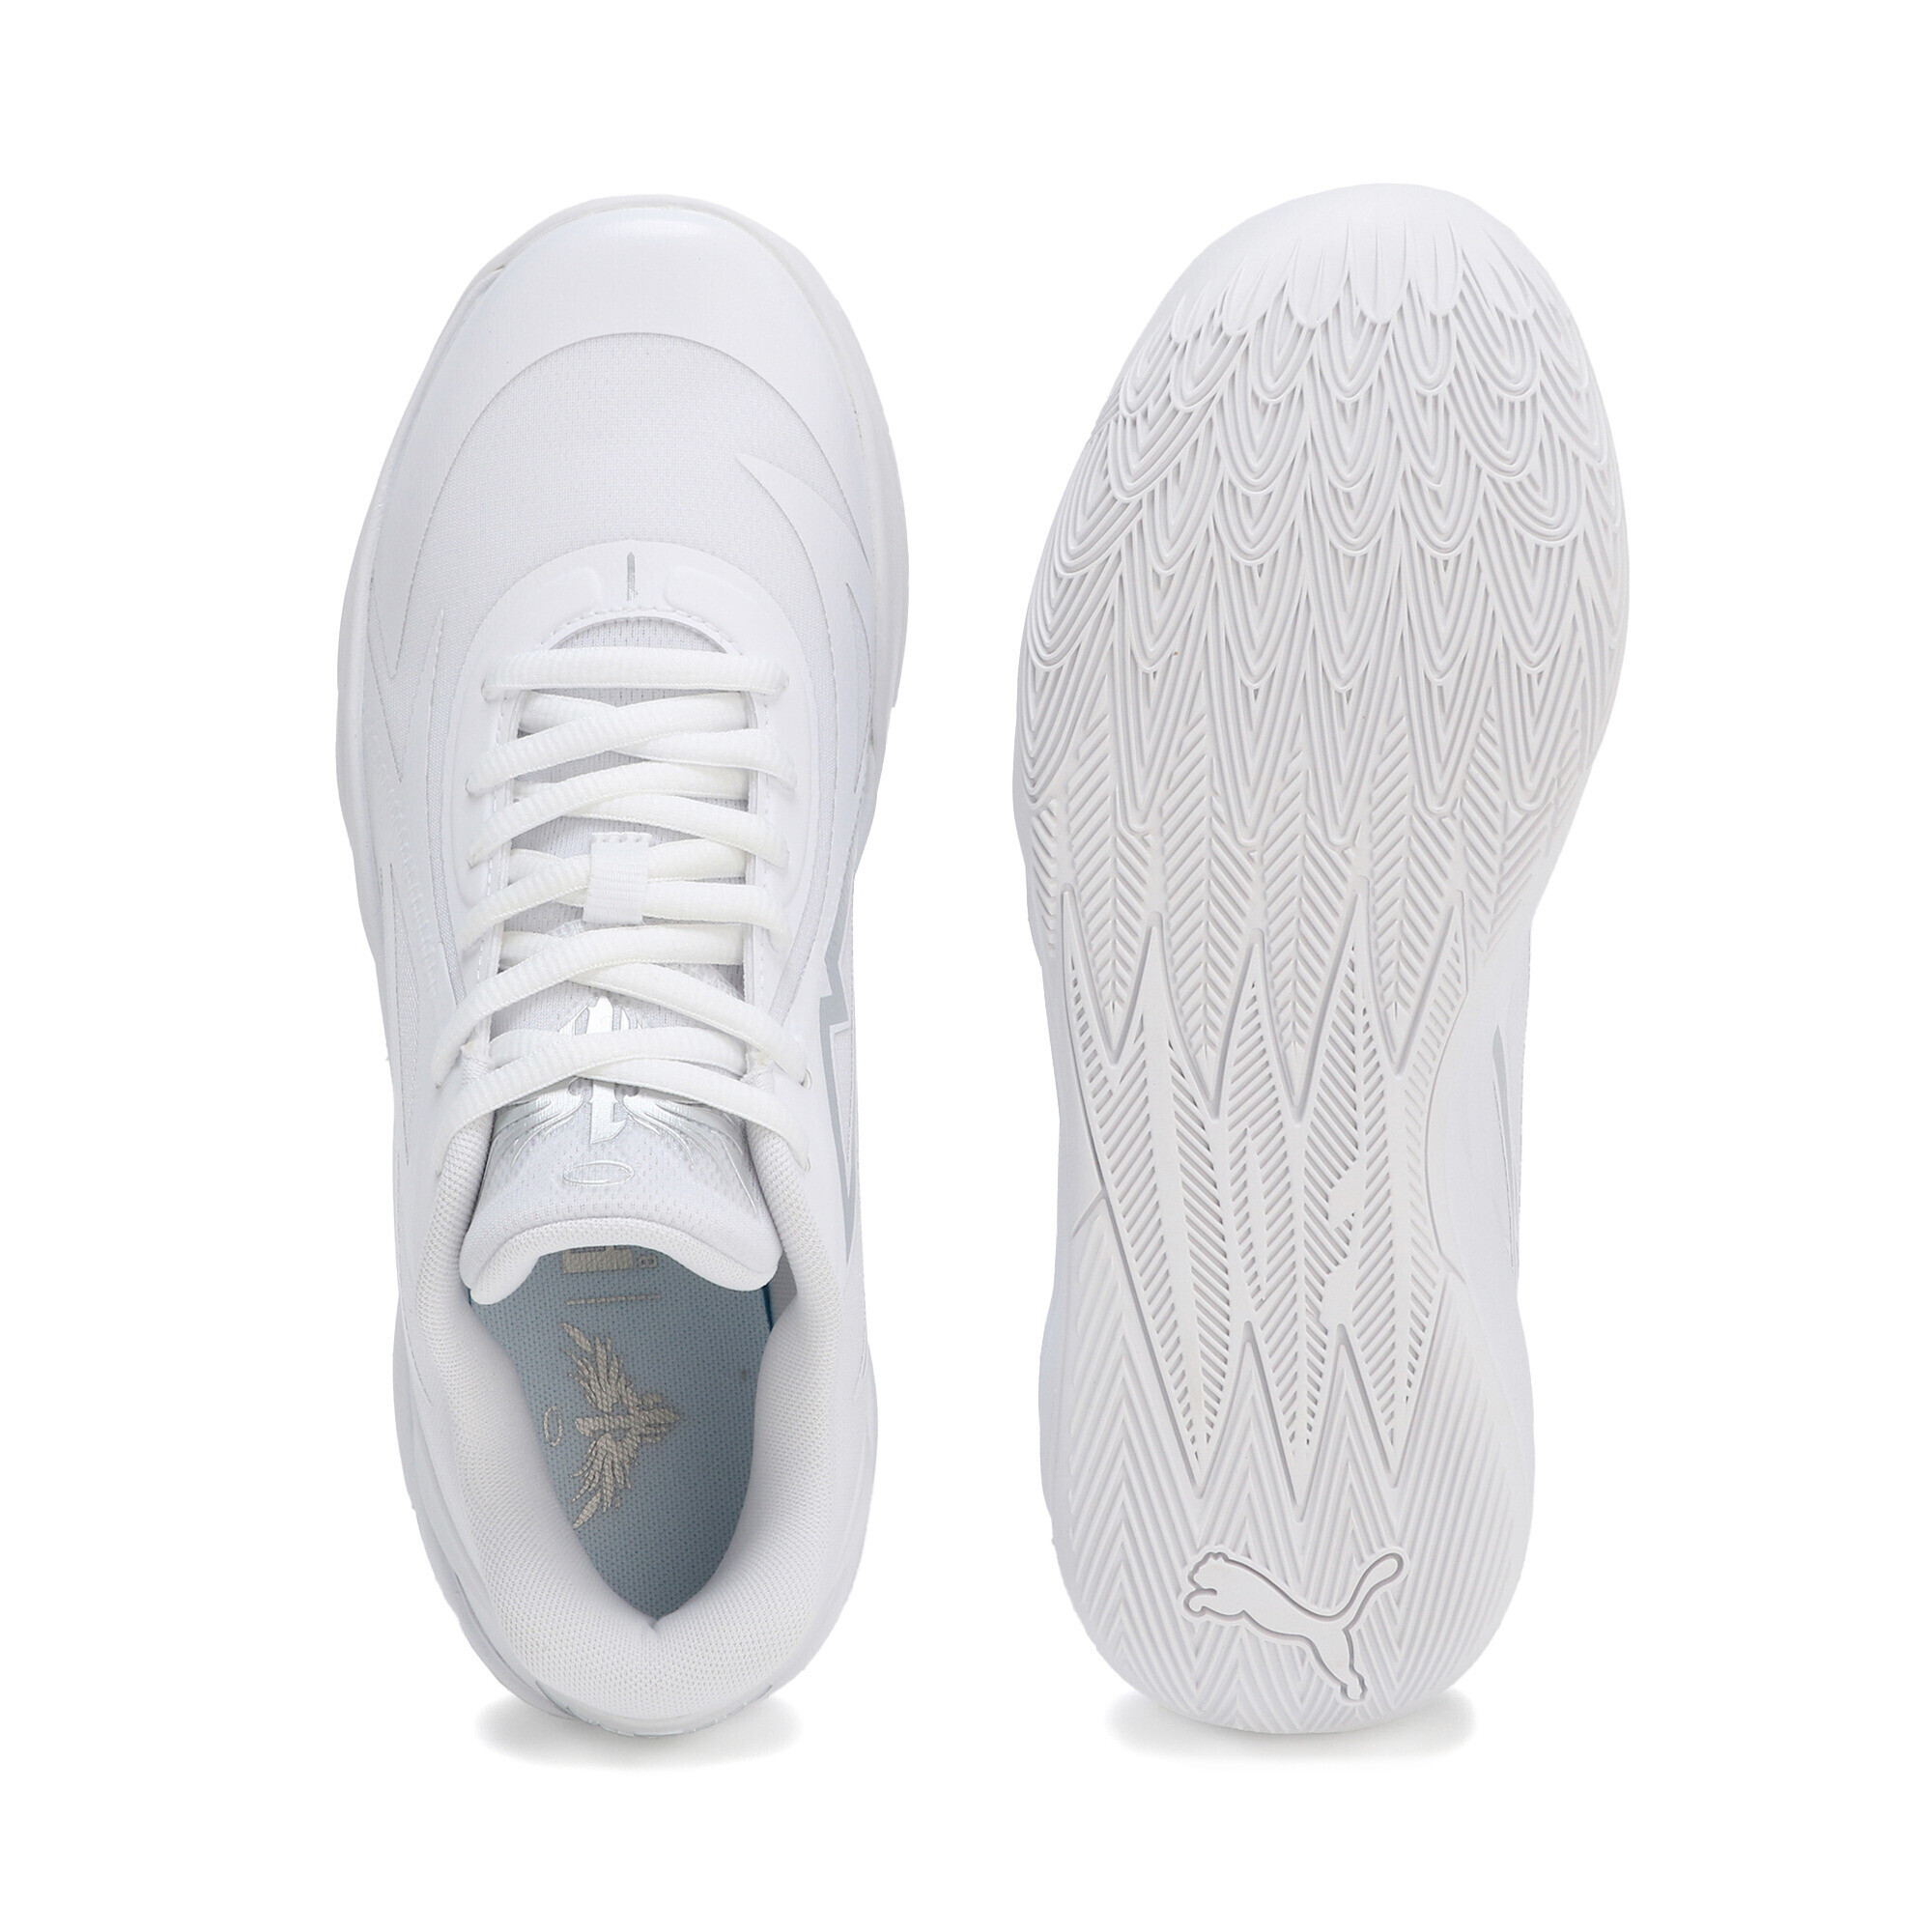 Men's PUMA MB.02 Lo Basketball Shoes In White/Silver, Size EU 43